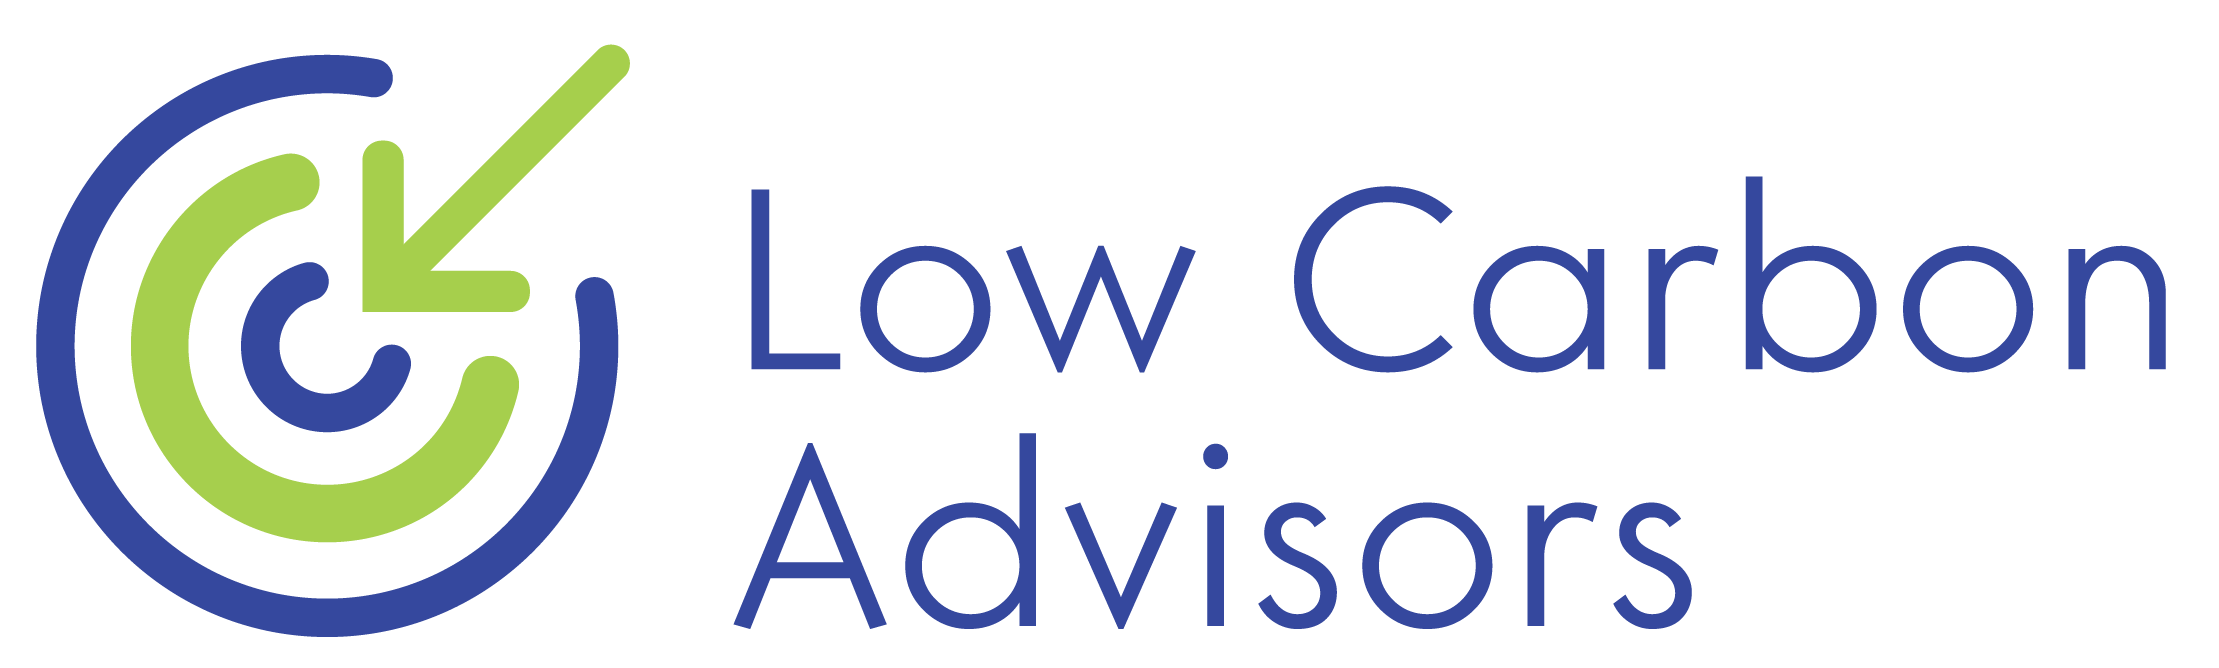 Low Carbon Advisors - Pending B Corporation in Singapore